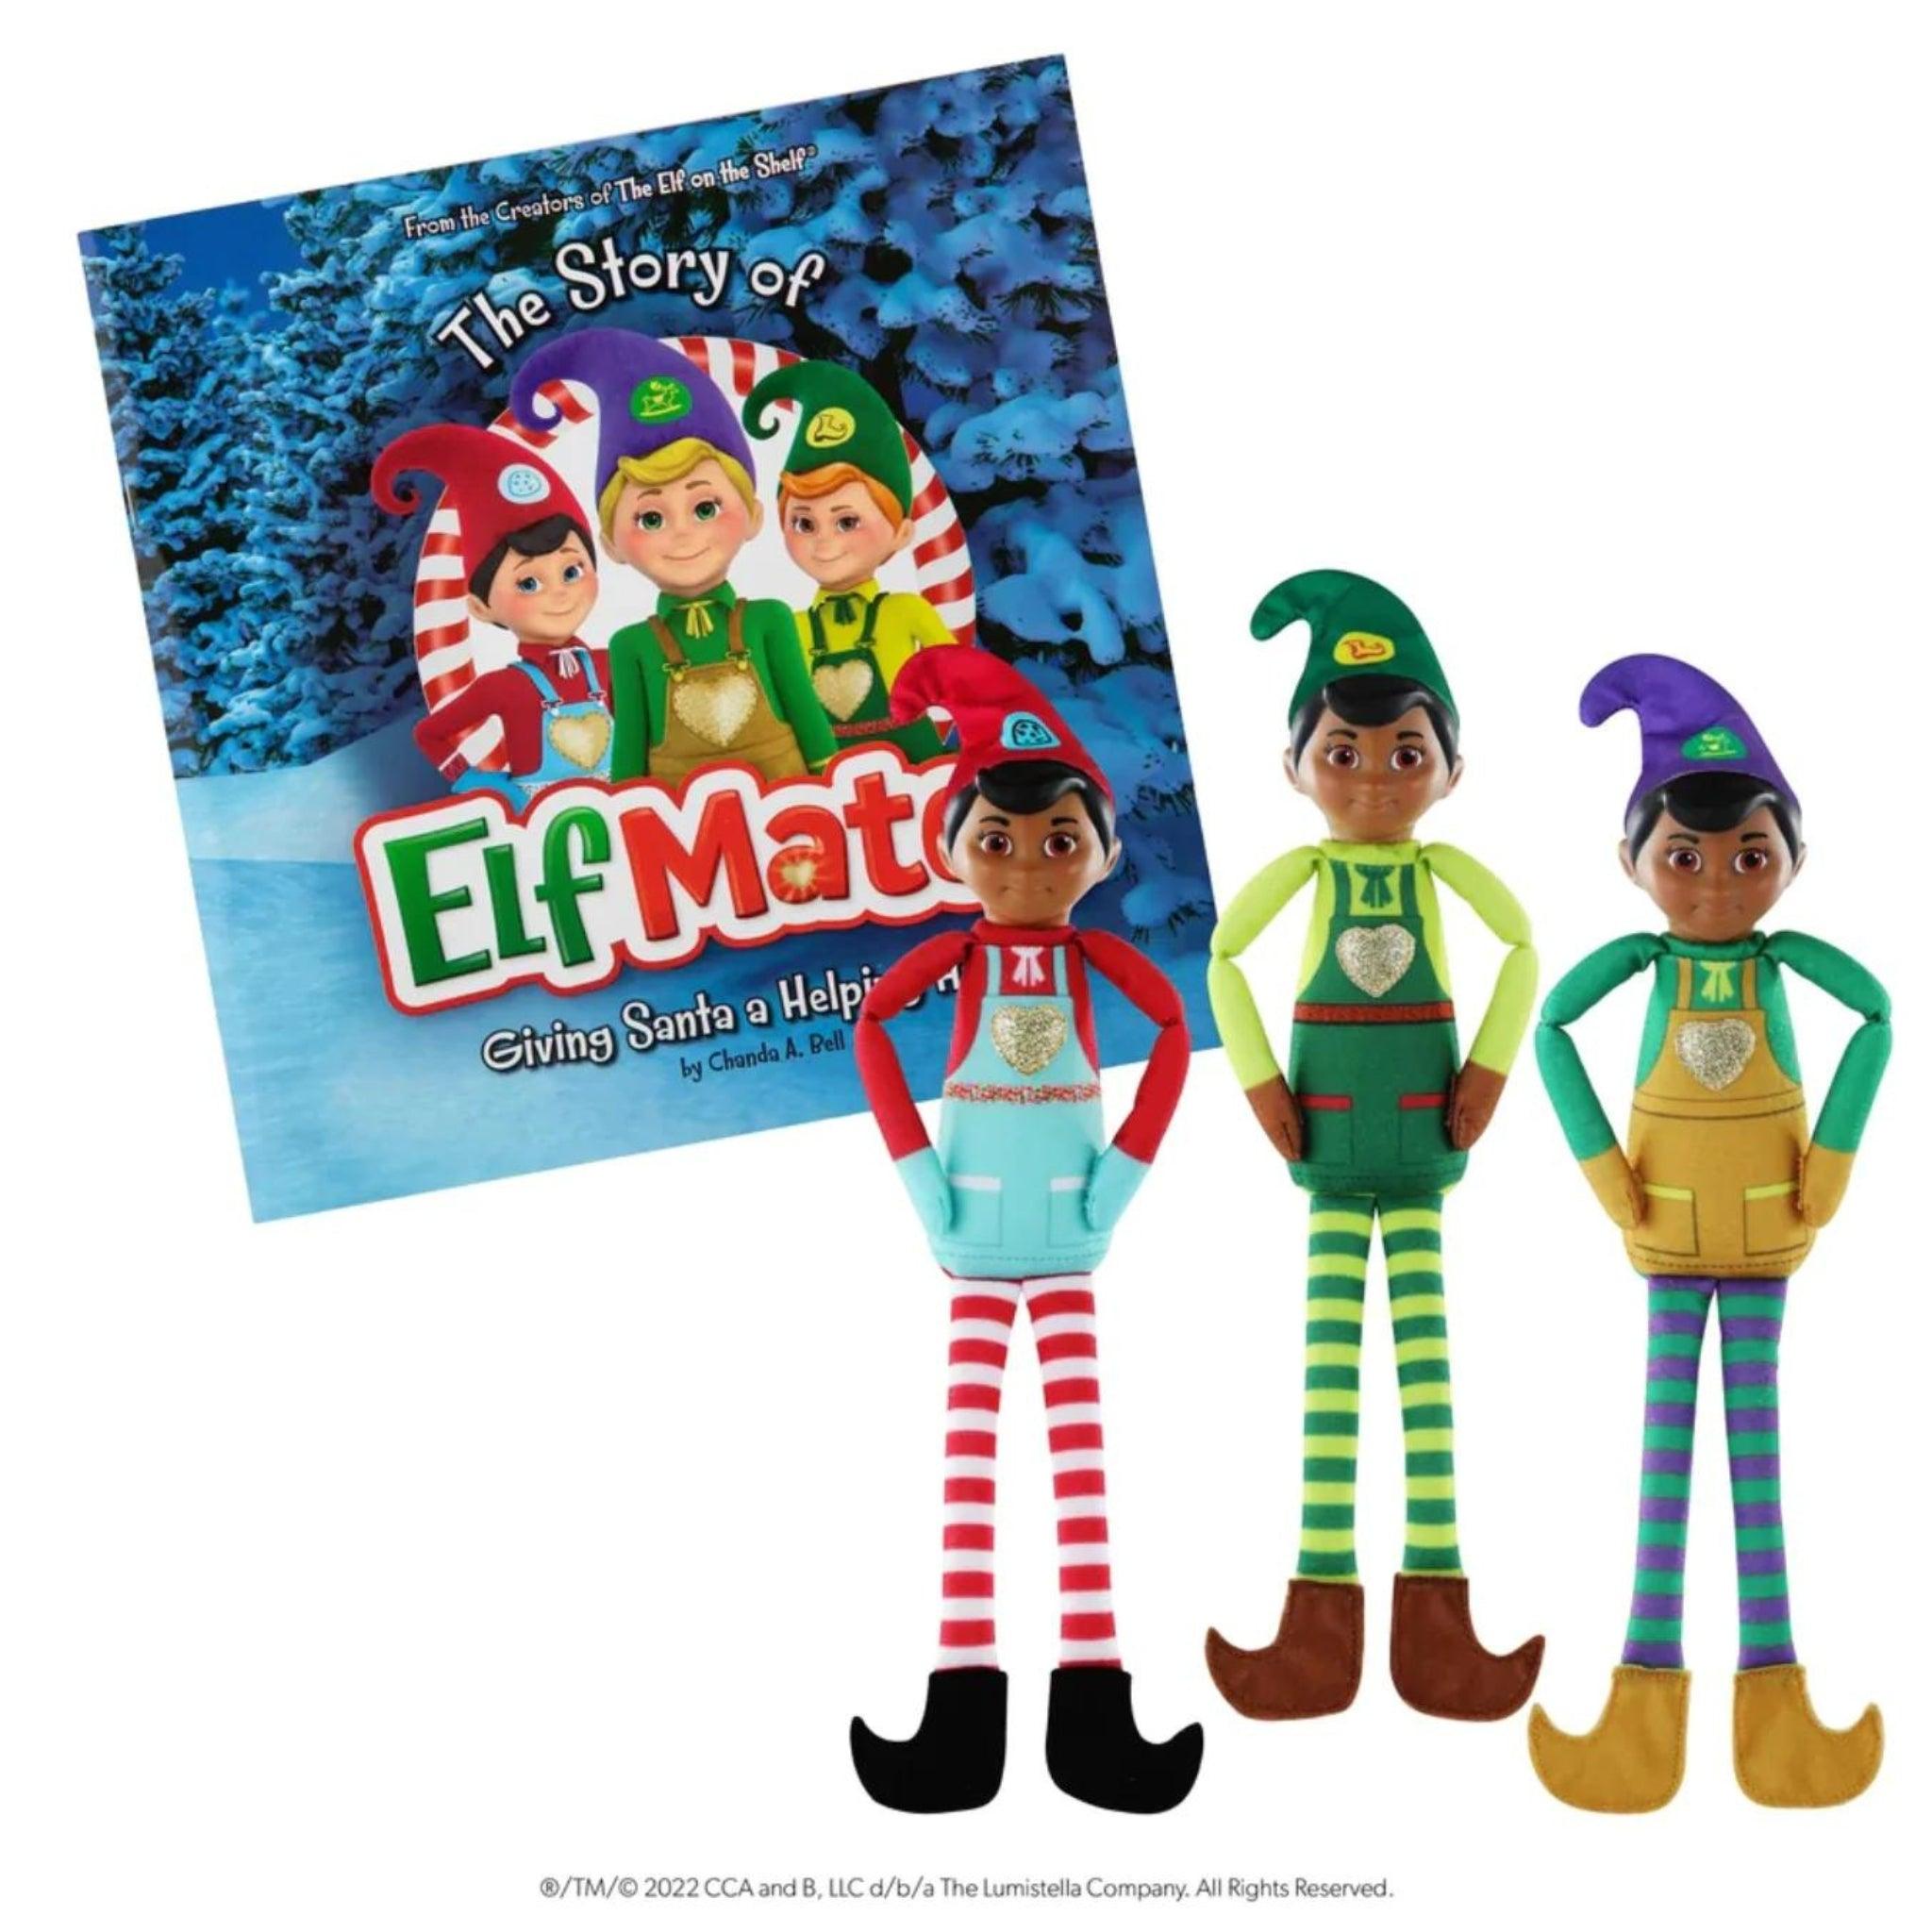 The Elf on the Shelf Elf Mates + Book